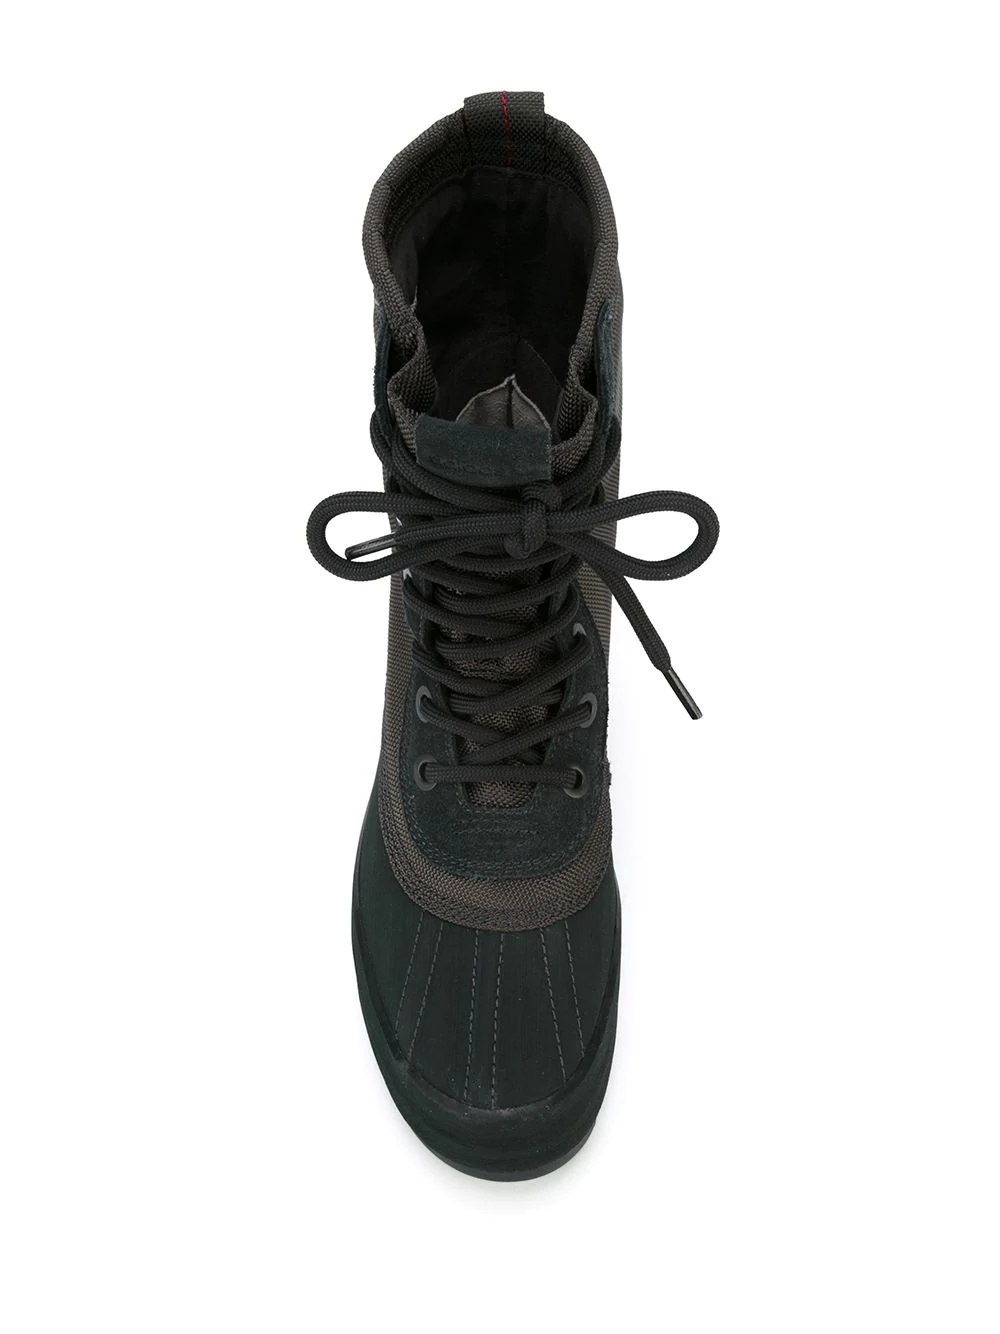 x Adidas Originals by Ye 950 boots - 4